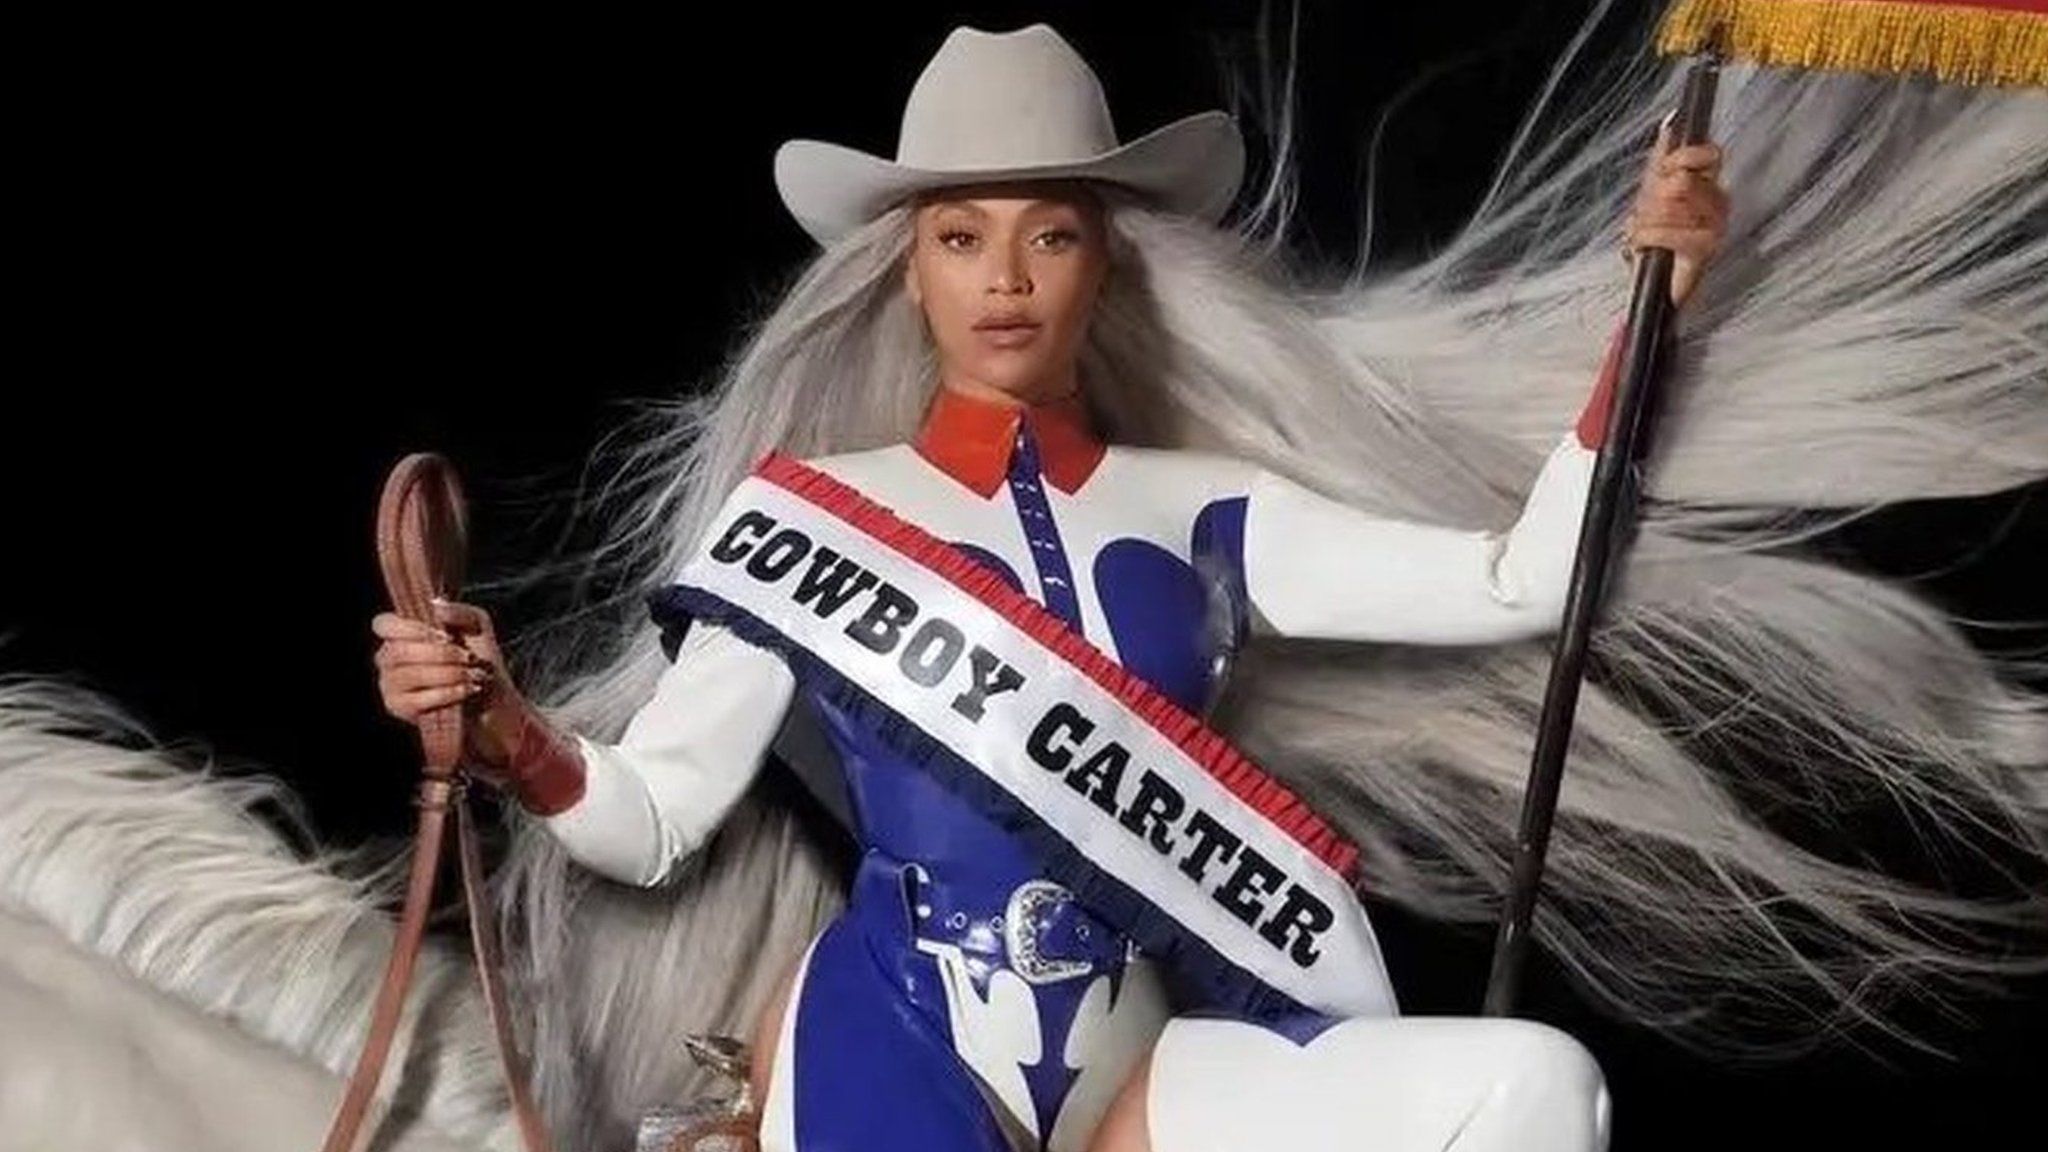 Beyoncé: Singer praised for 'impressive' country album Cowboy Carter - BBC  News